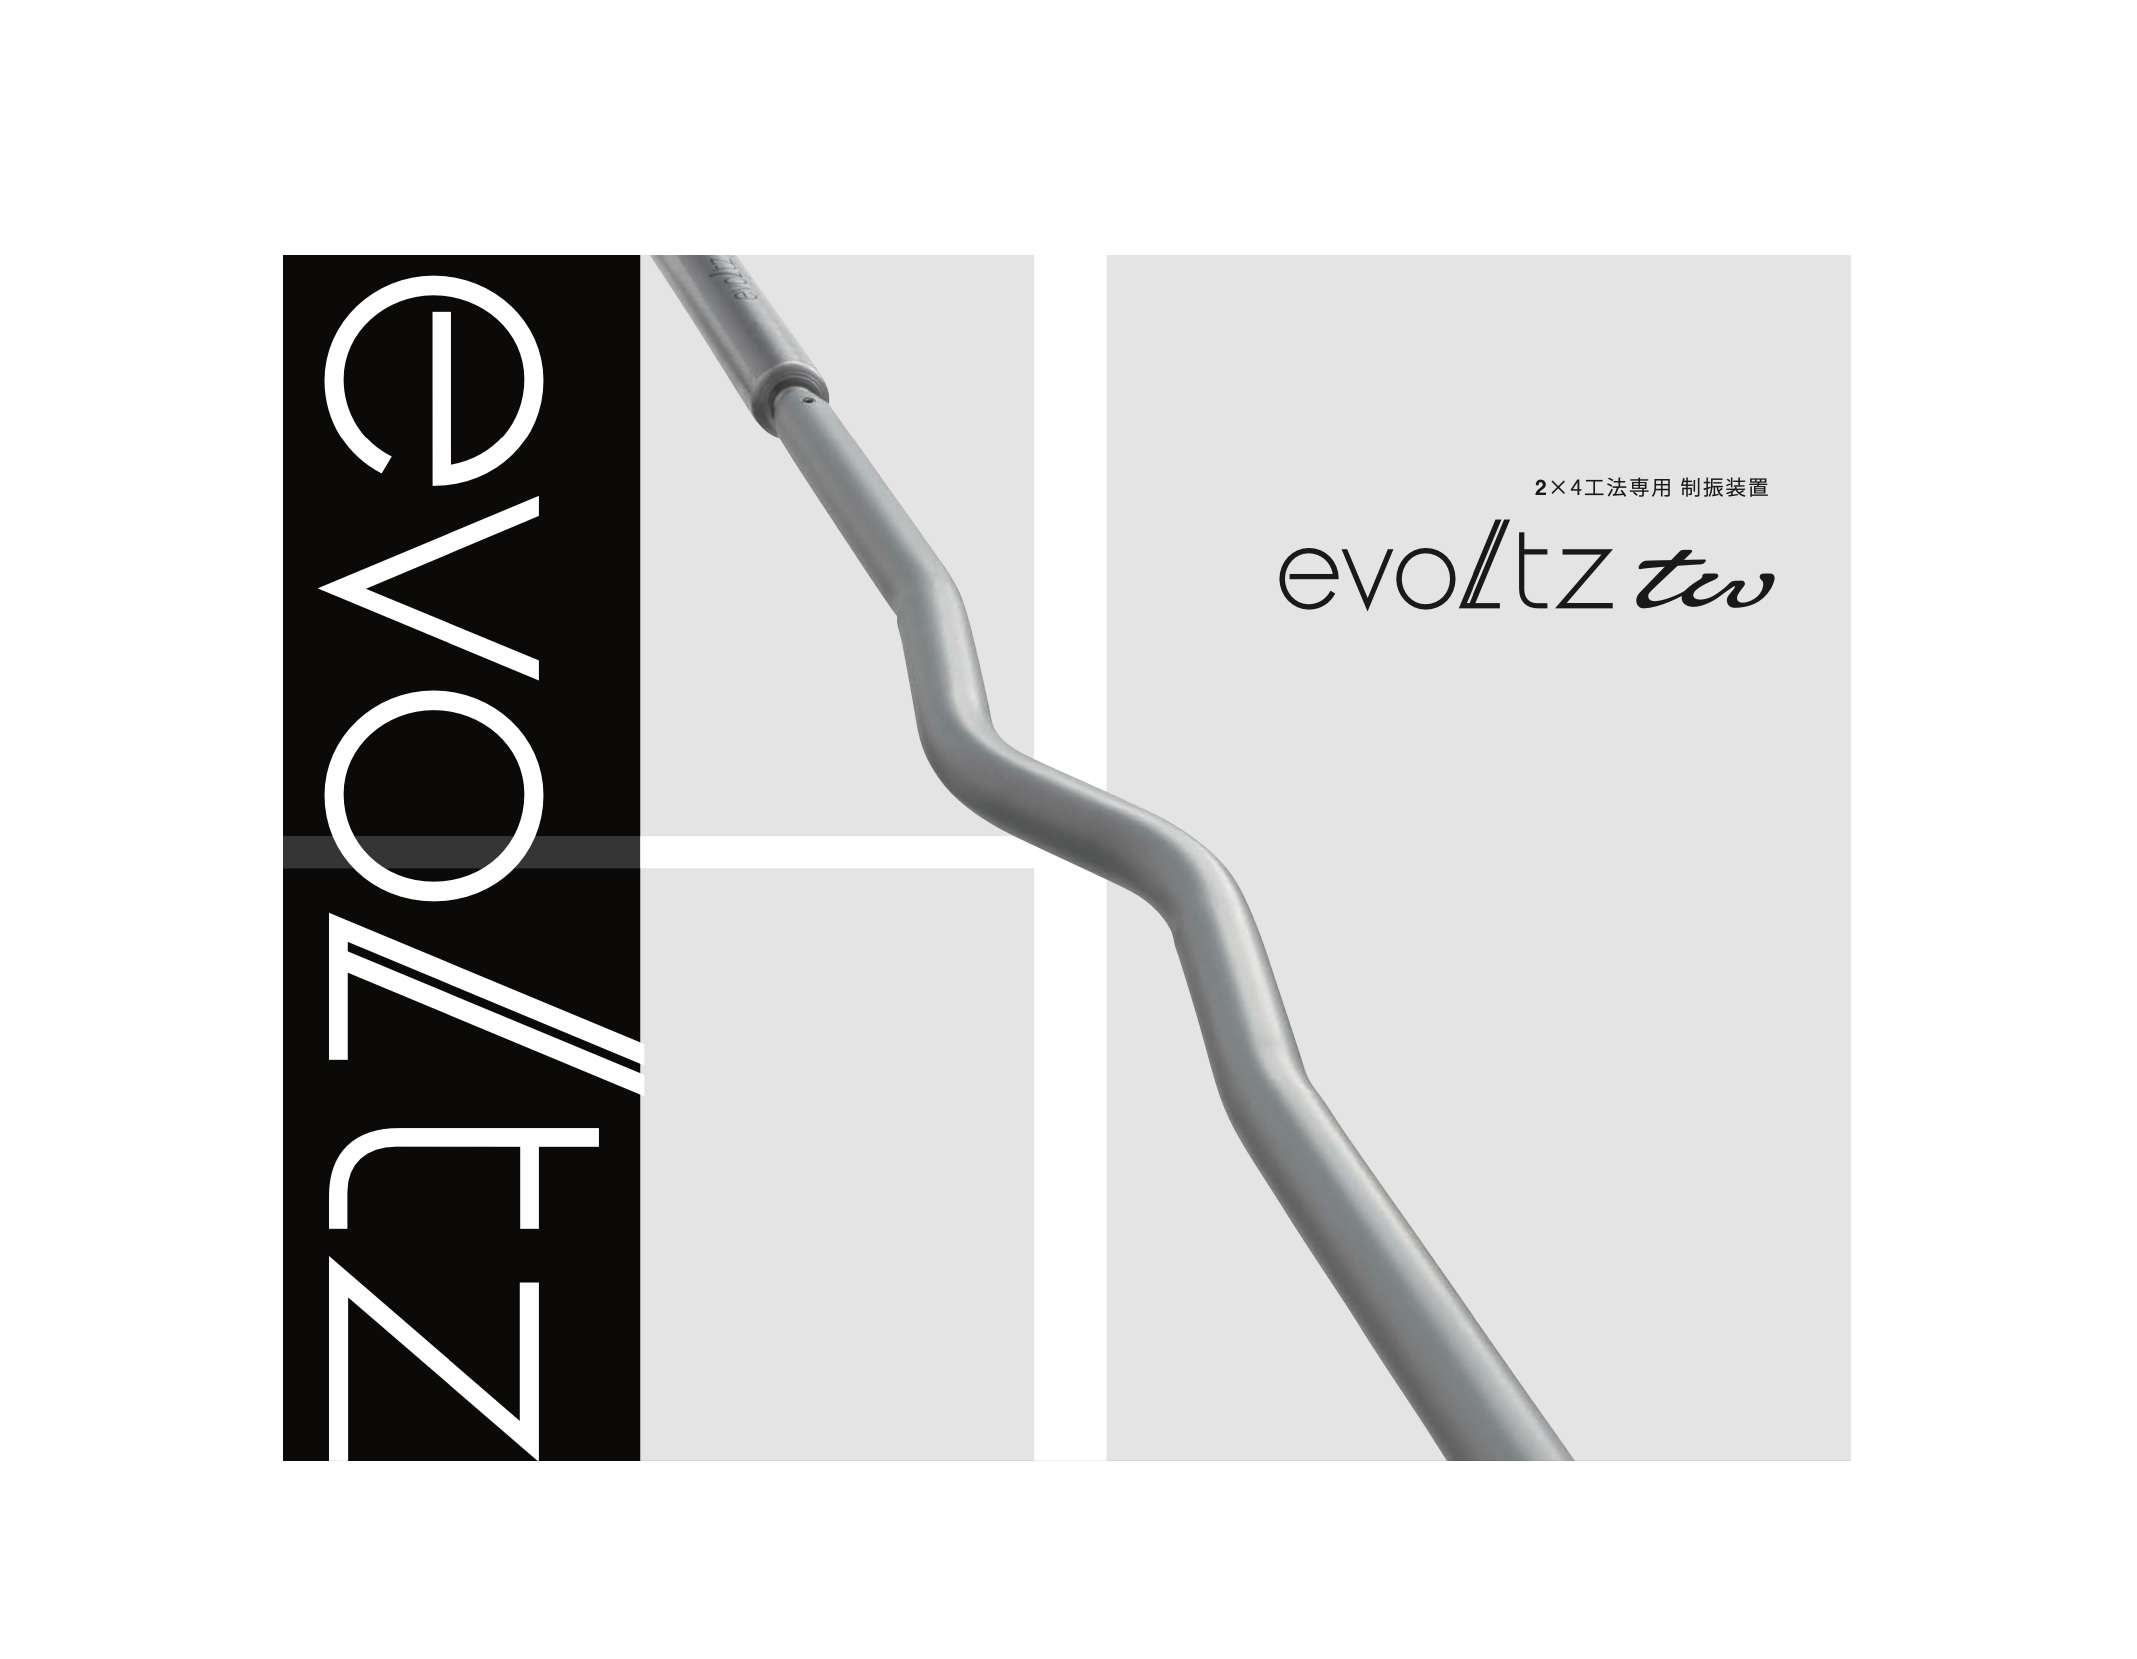 evoltz、2×4工法専用の油圧式制振装置を発売